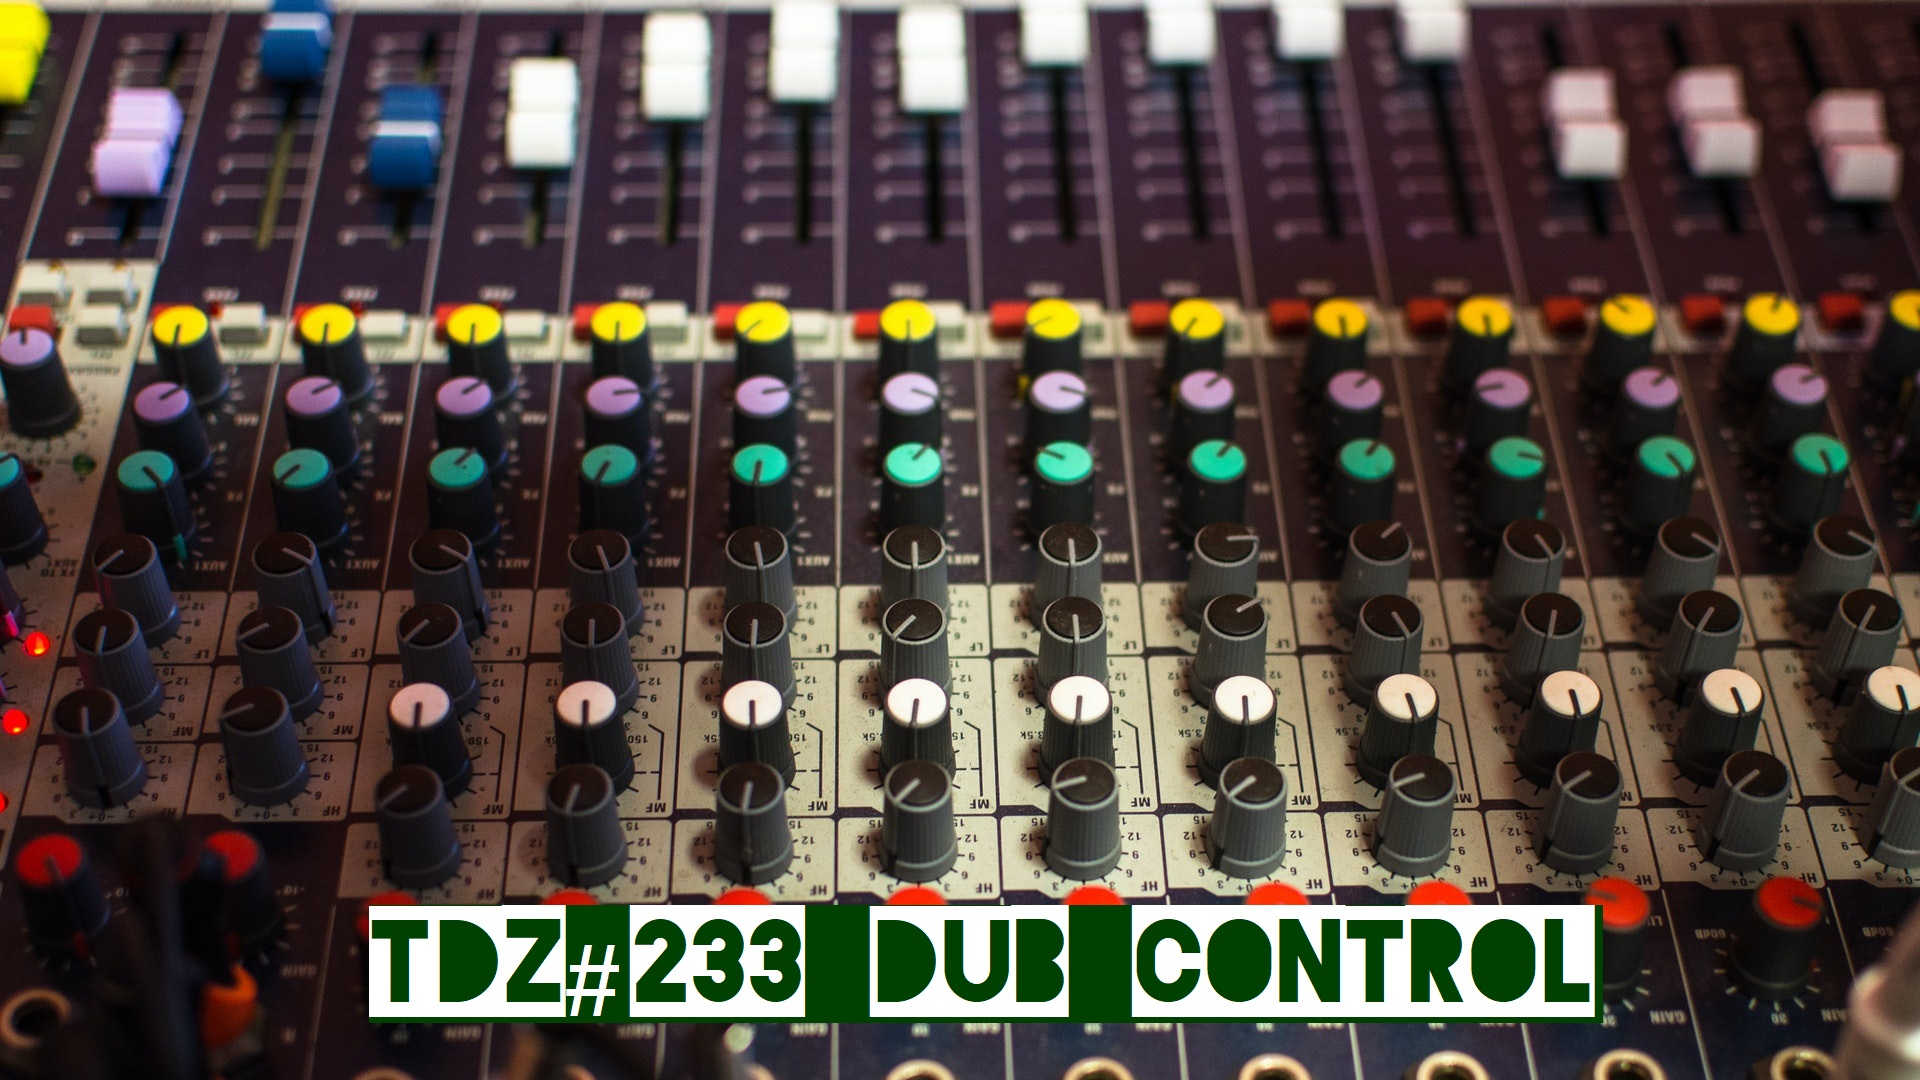 TDZ#233... Dub Control.....